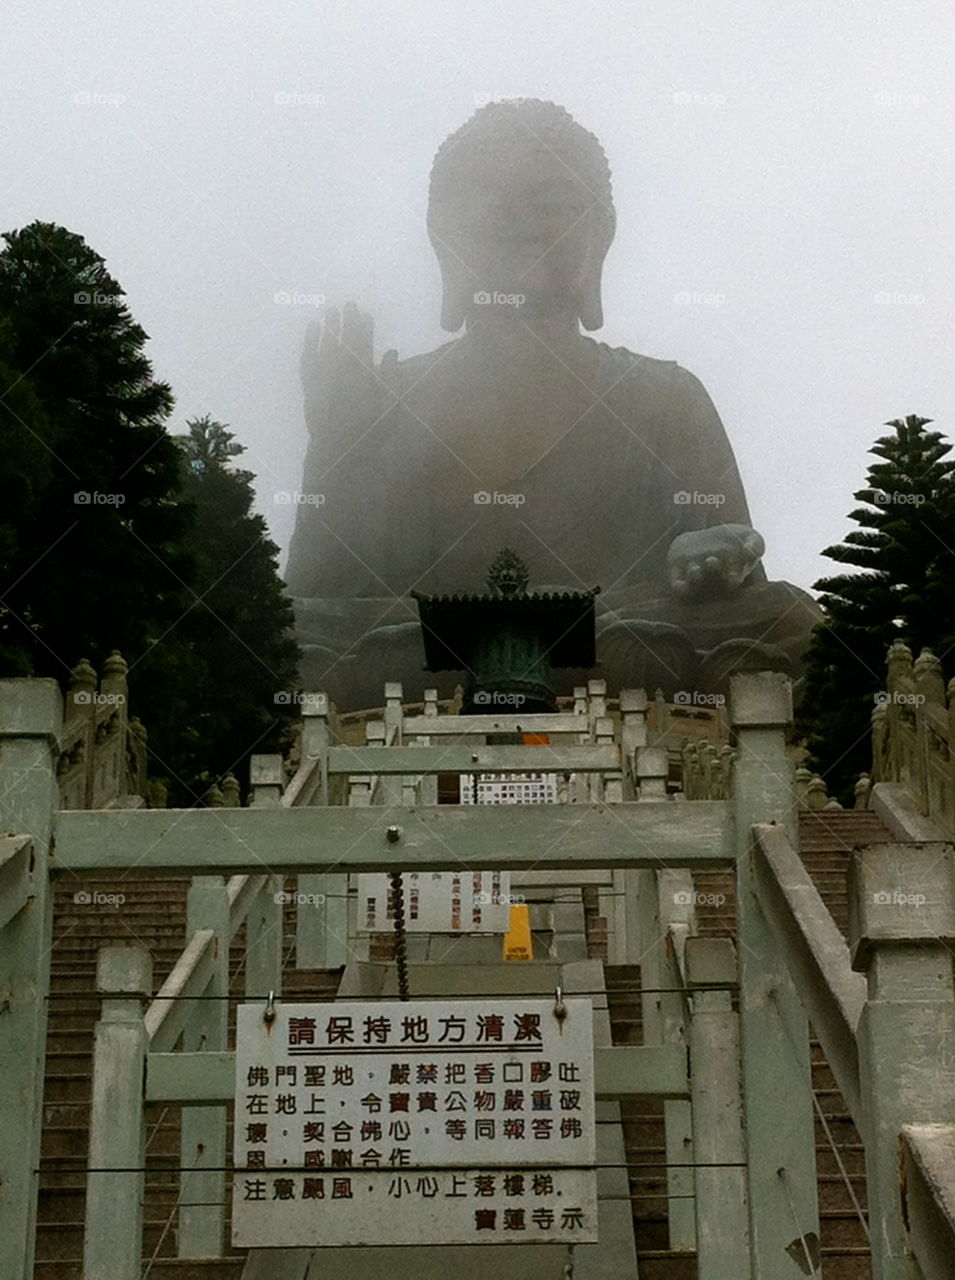 Hong Kong’s Big Buddha. 